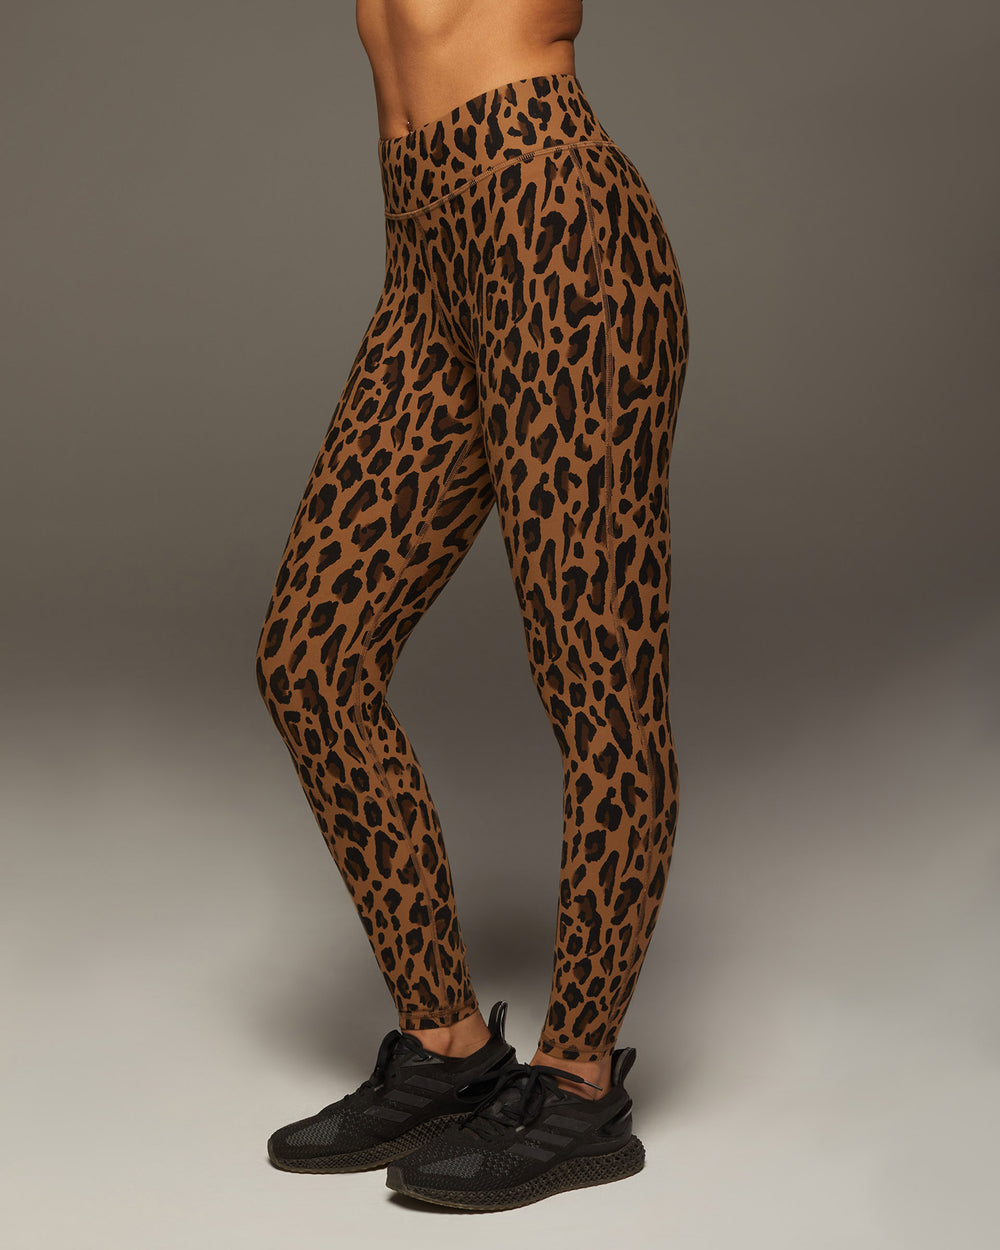 Verve Leopard Print Legging - Brown